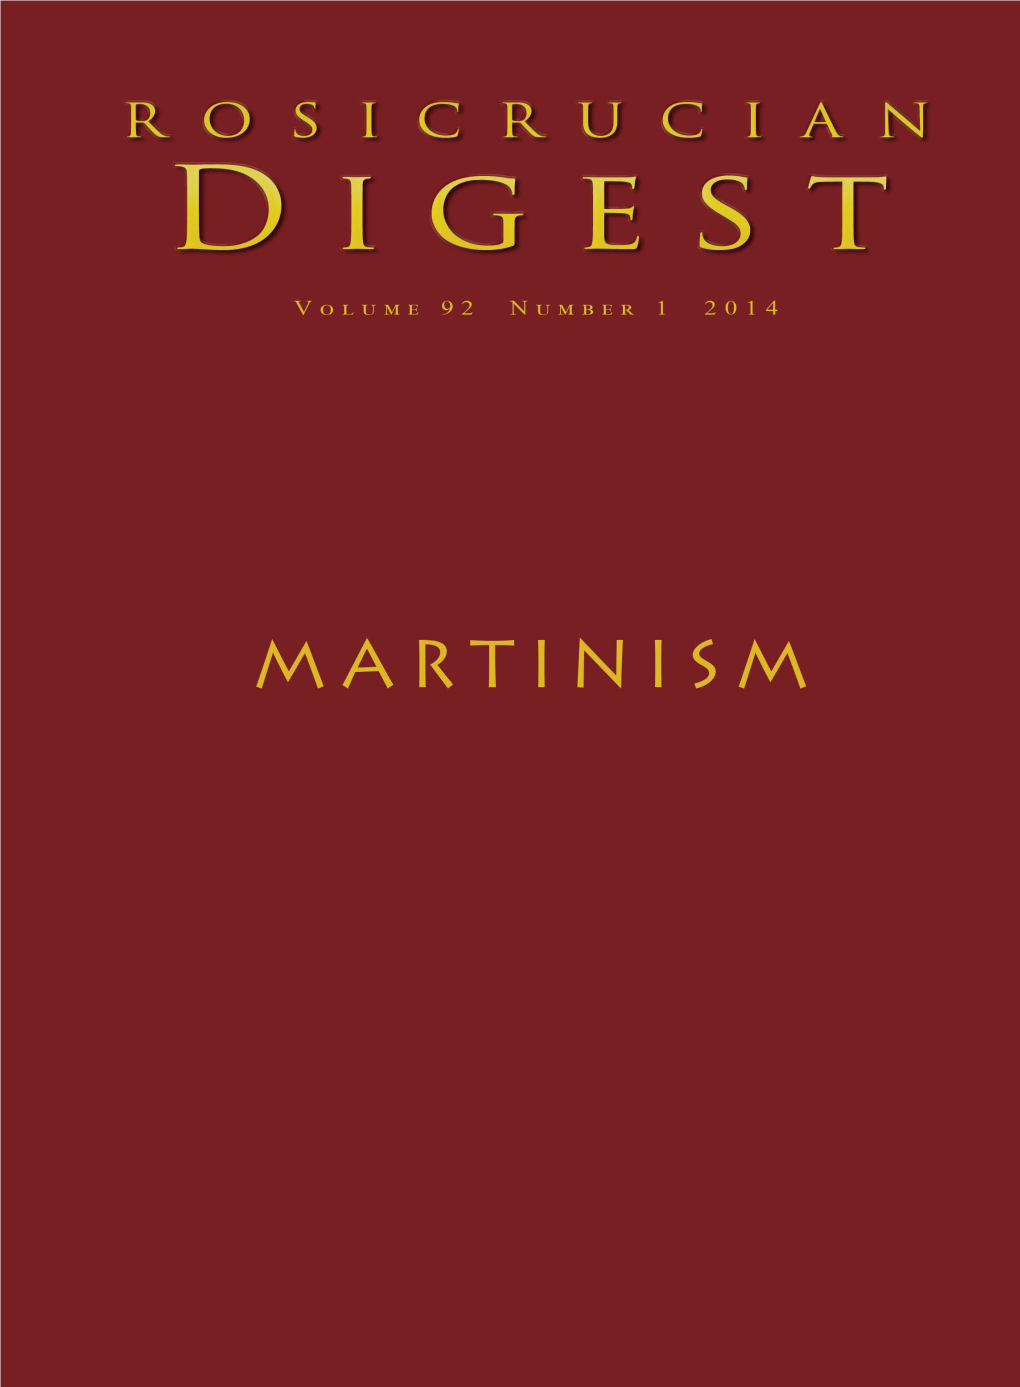 Rosicrucian Digest Vol 92 No 1 2014 Martinism